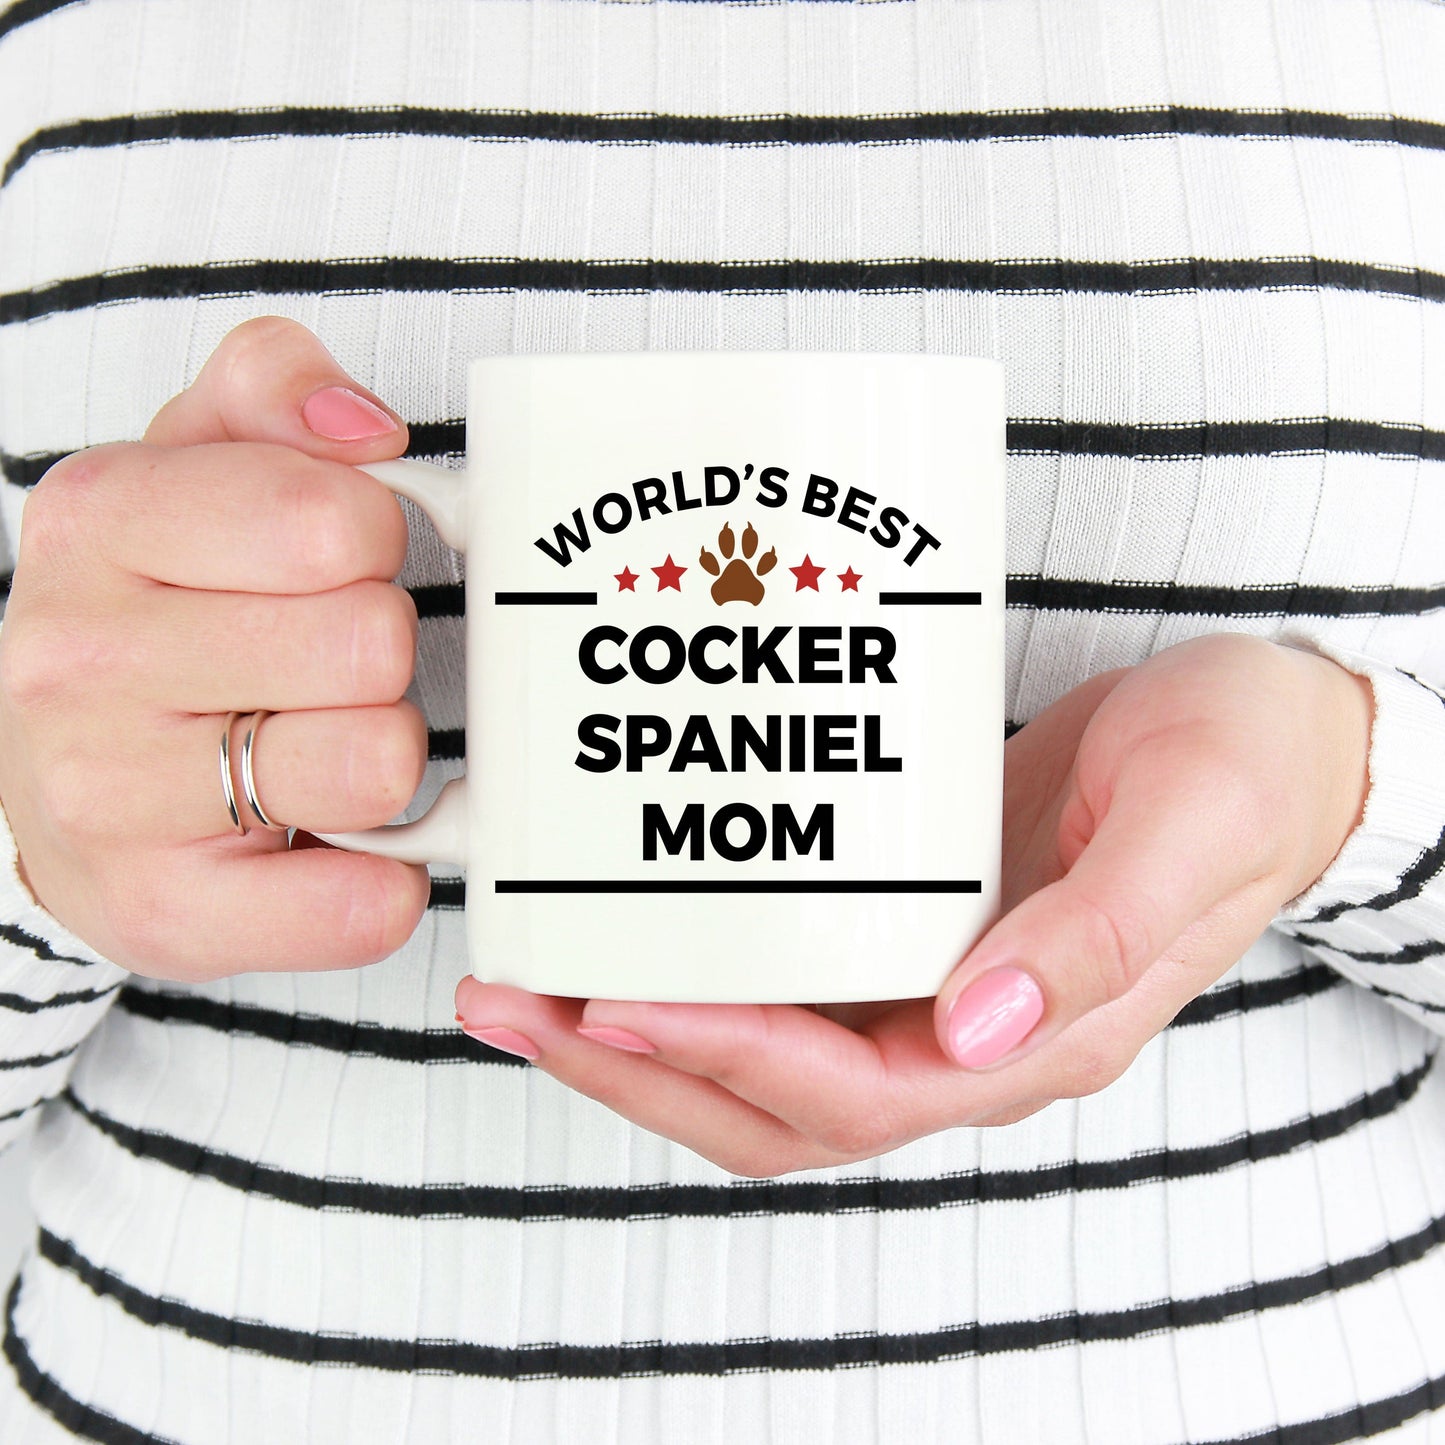 Cocker Spaniel Dog Mom Coffee Mug